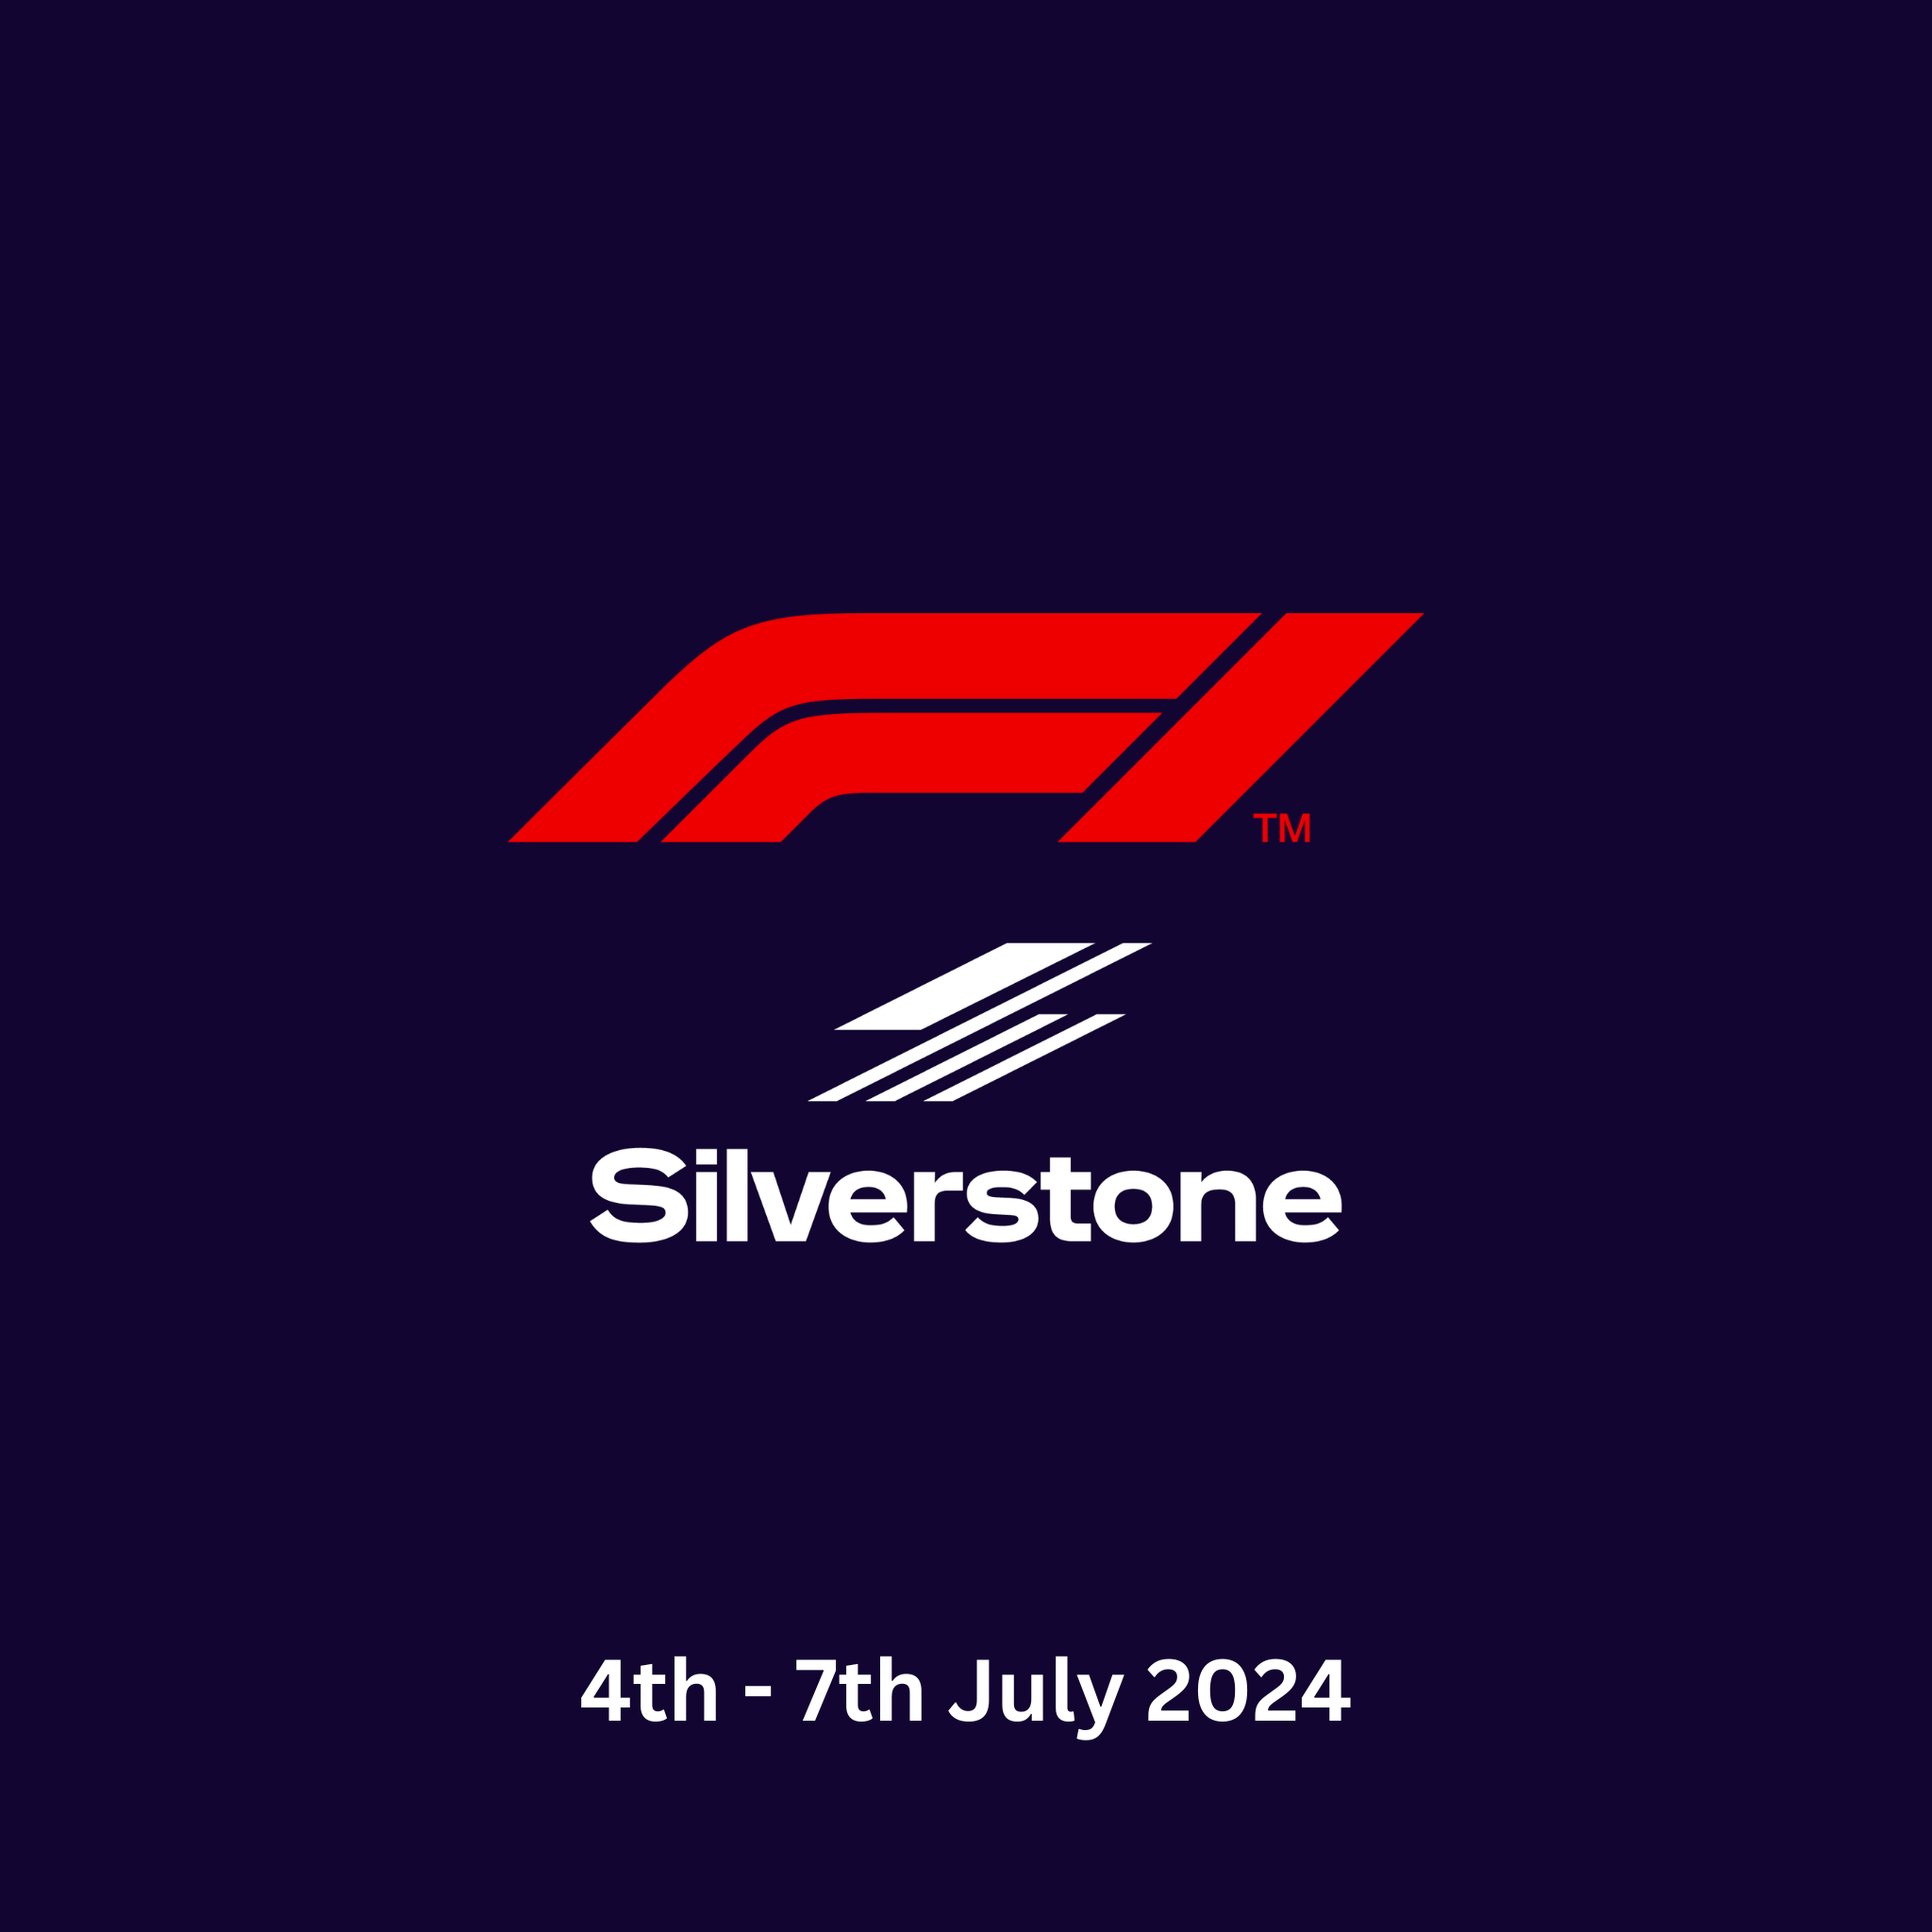 Silverstone F1 2024 Advanced Mobility Event Hire